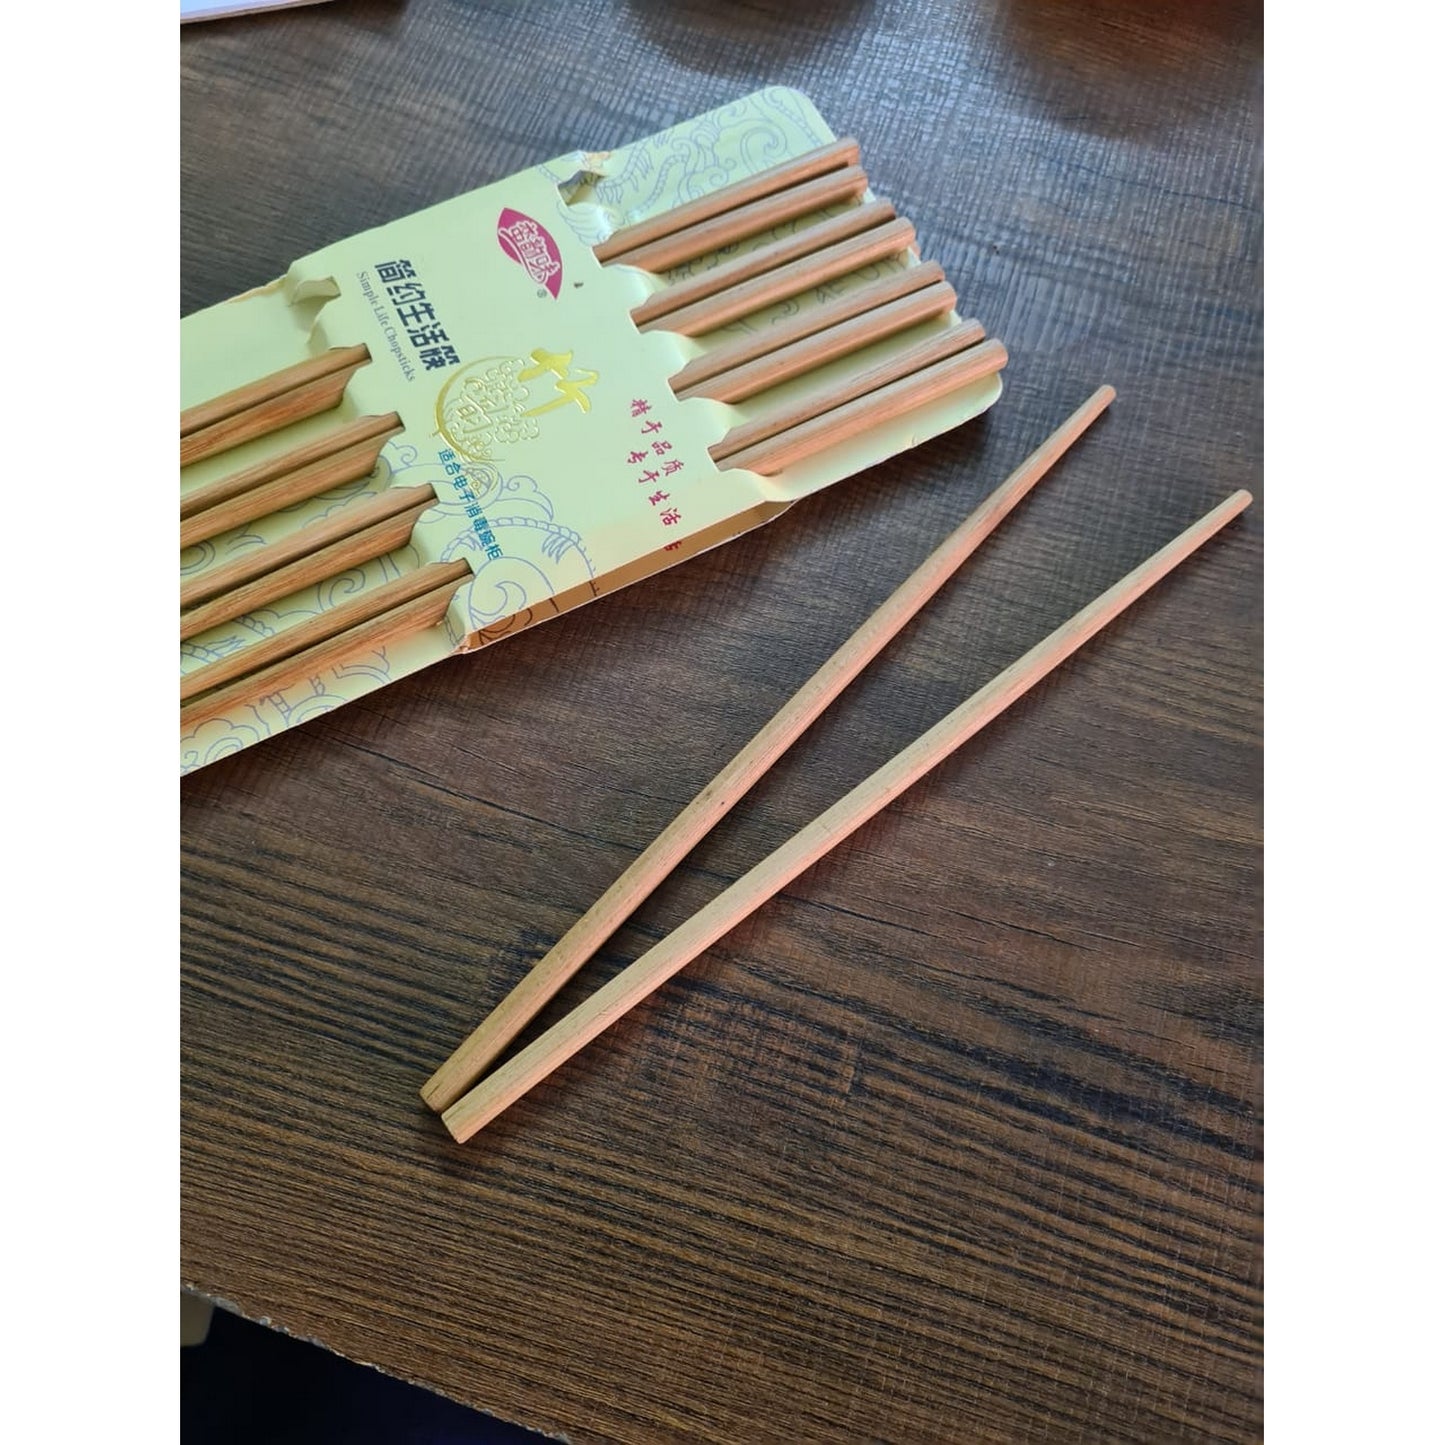 Reusable Chinese Bamboo Chopsticks (1 Pair) Pack Of 5 - FlyingCart.pk